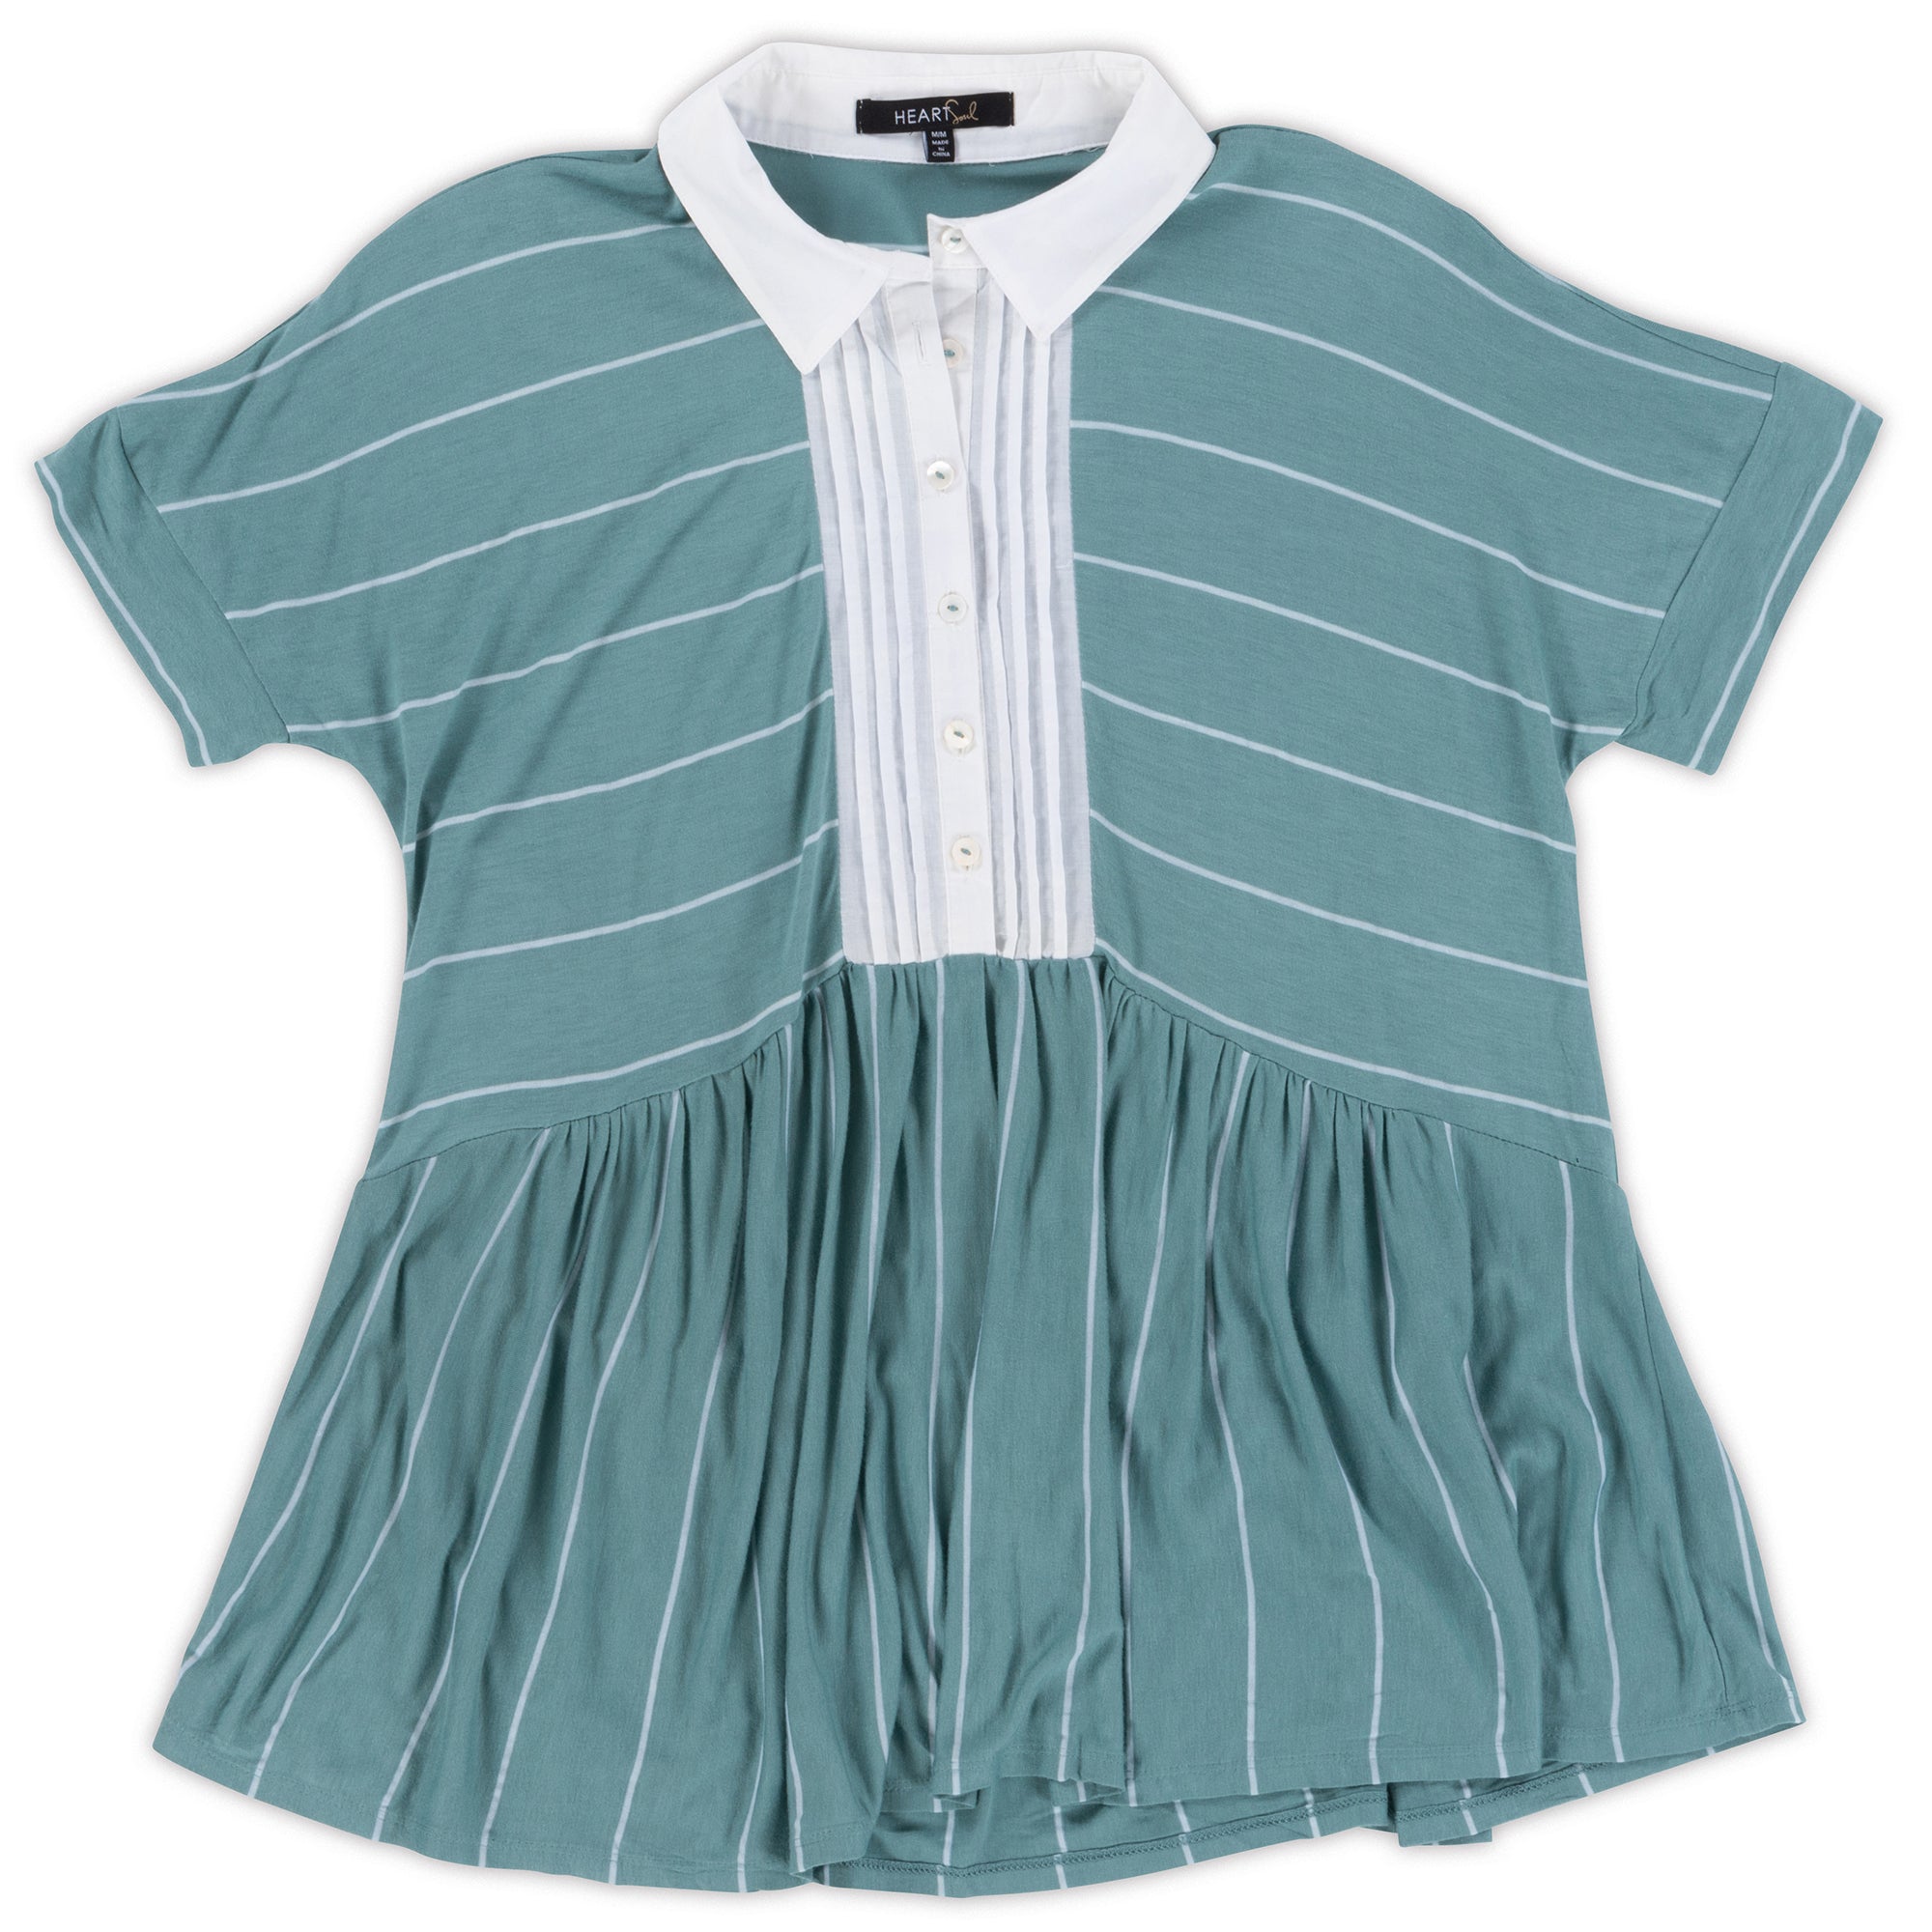 Women's Short Sleeves Top w/Stripes - 1 Color/4 Sizes - 8pcs/pack ($7.90/pc)